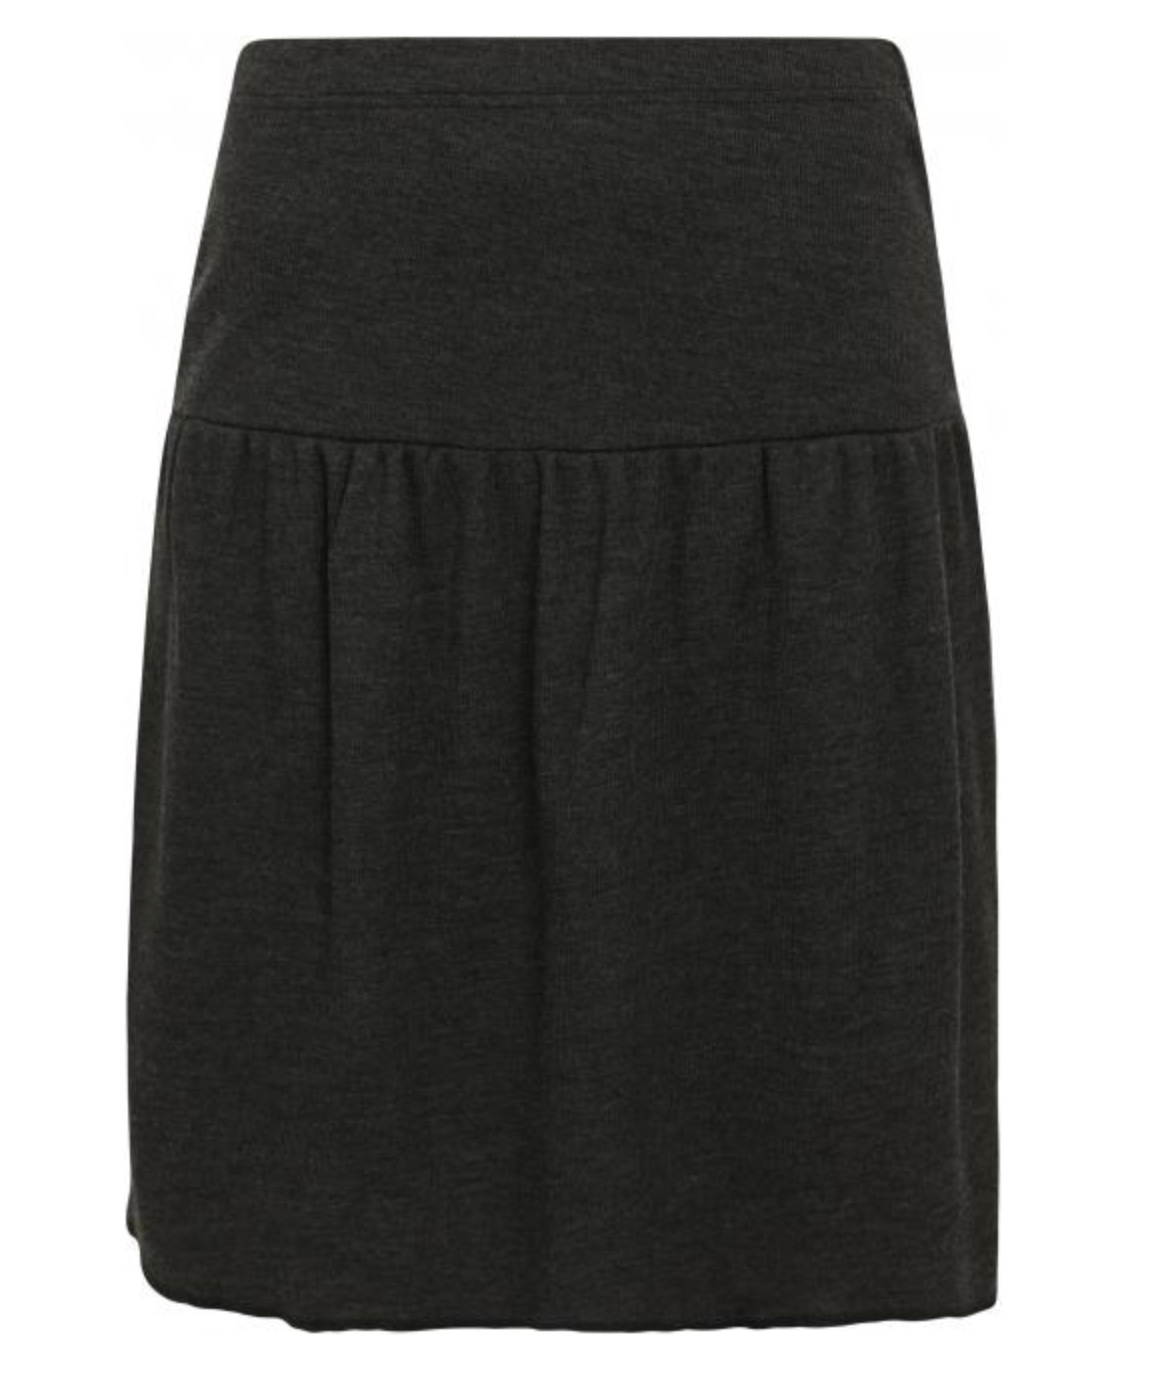 Skirt in 100% merino wool